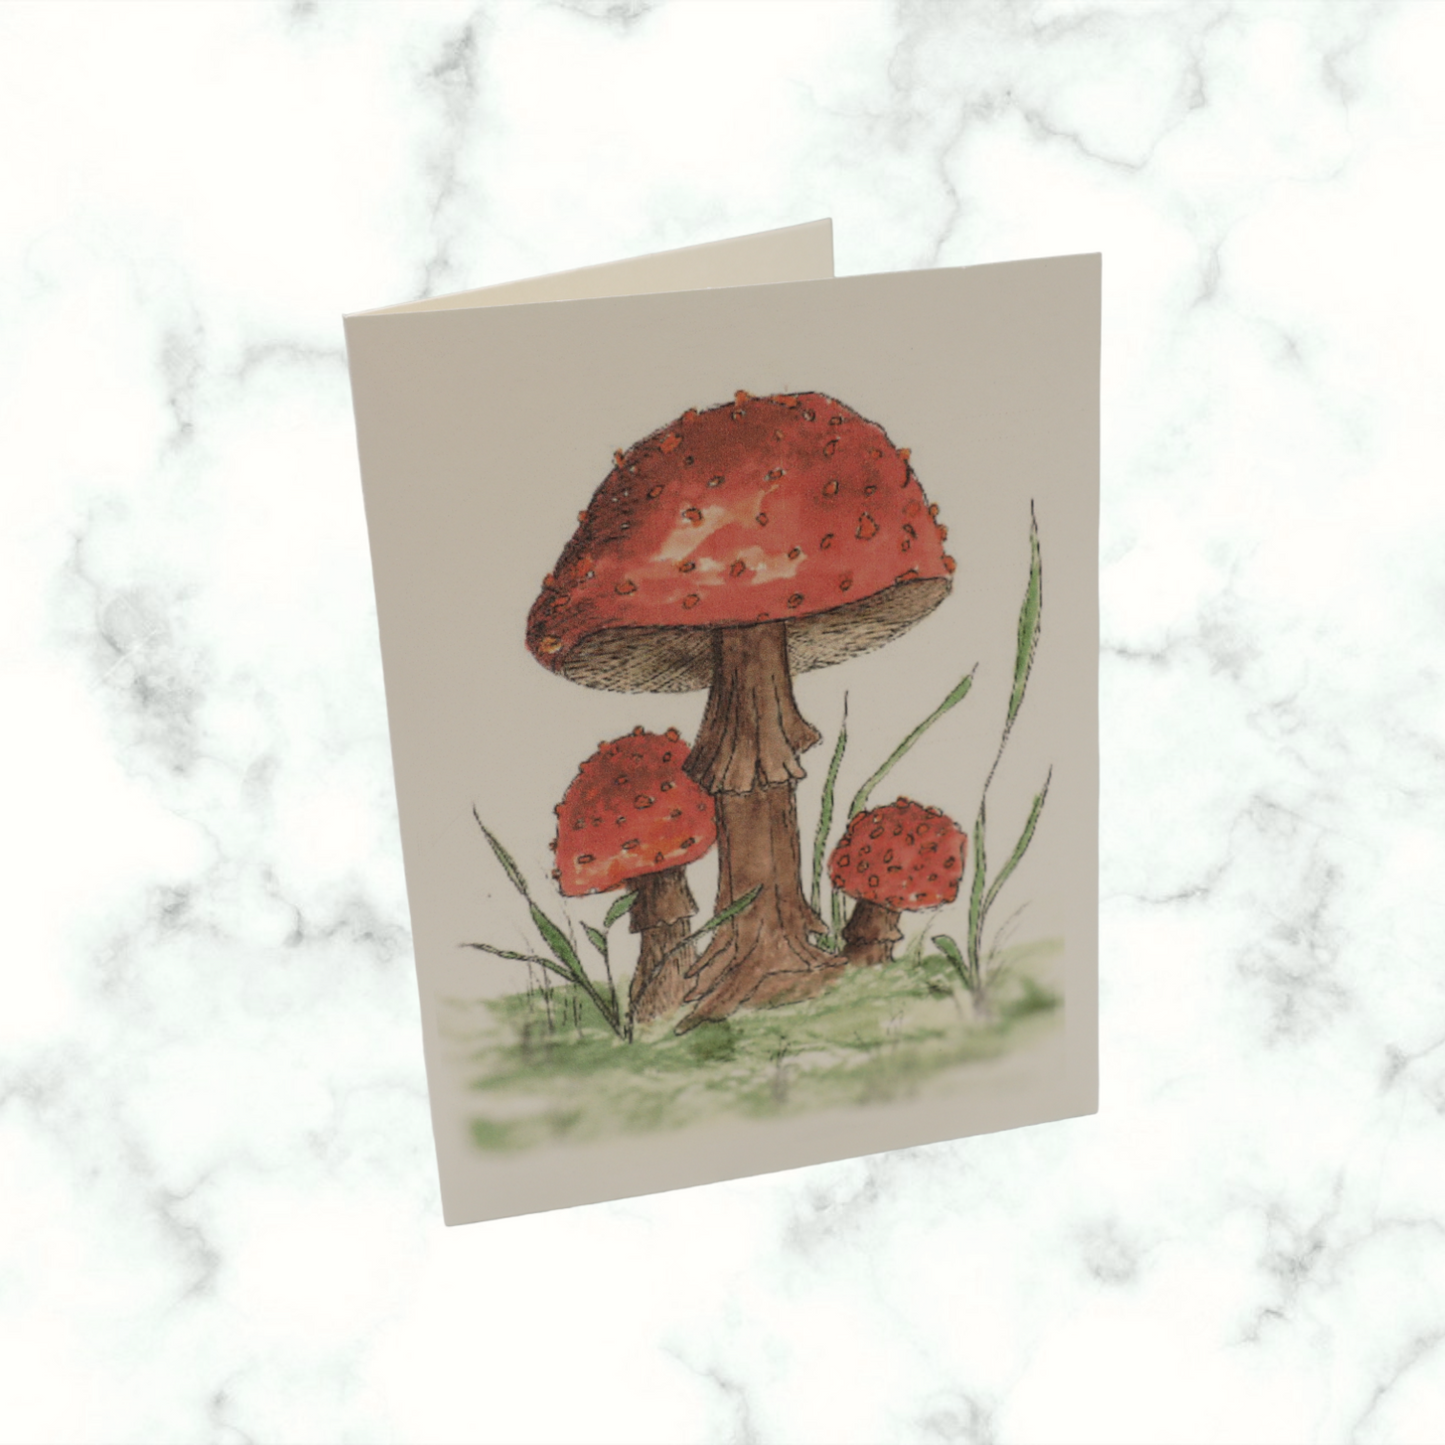 Red Bumpy Mushrooms Watercolor Art Greeting Card